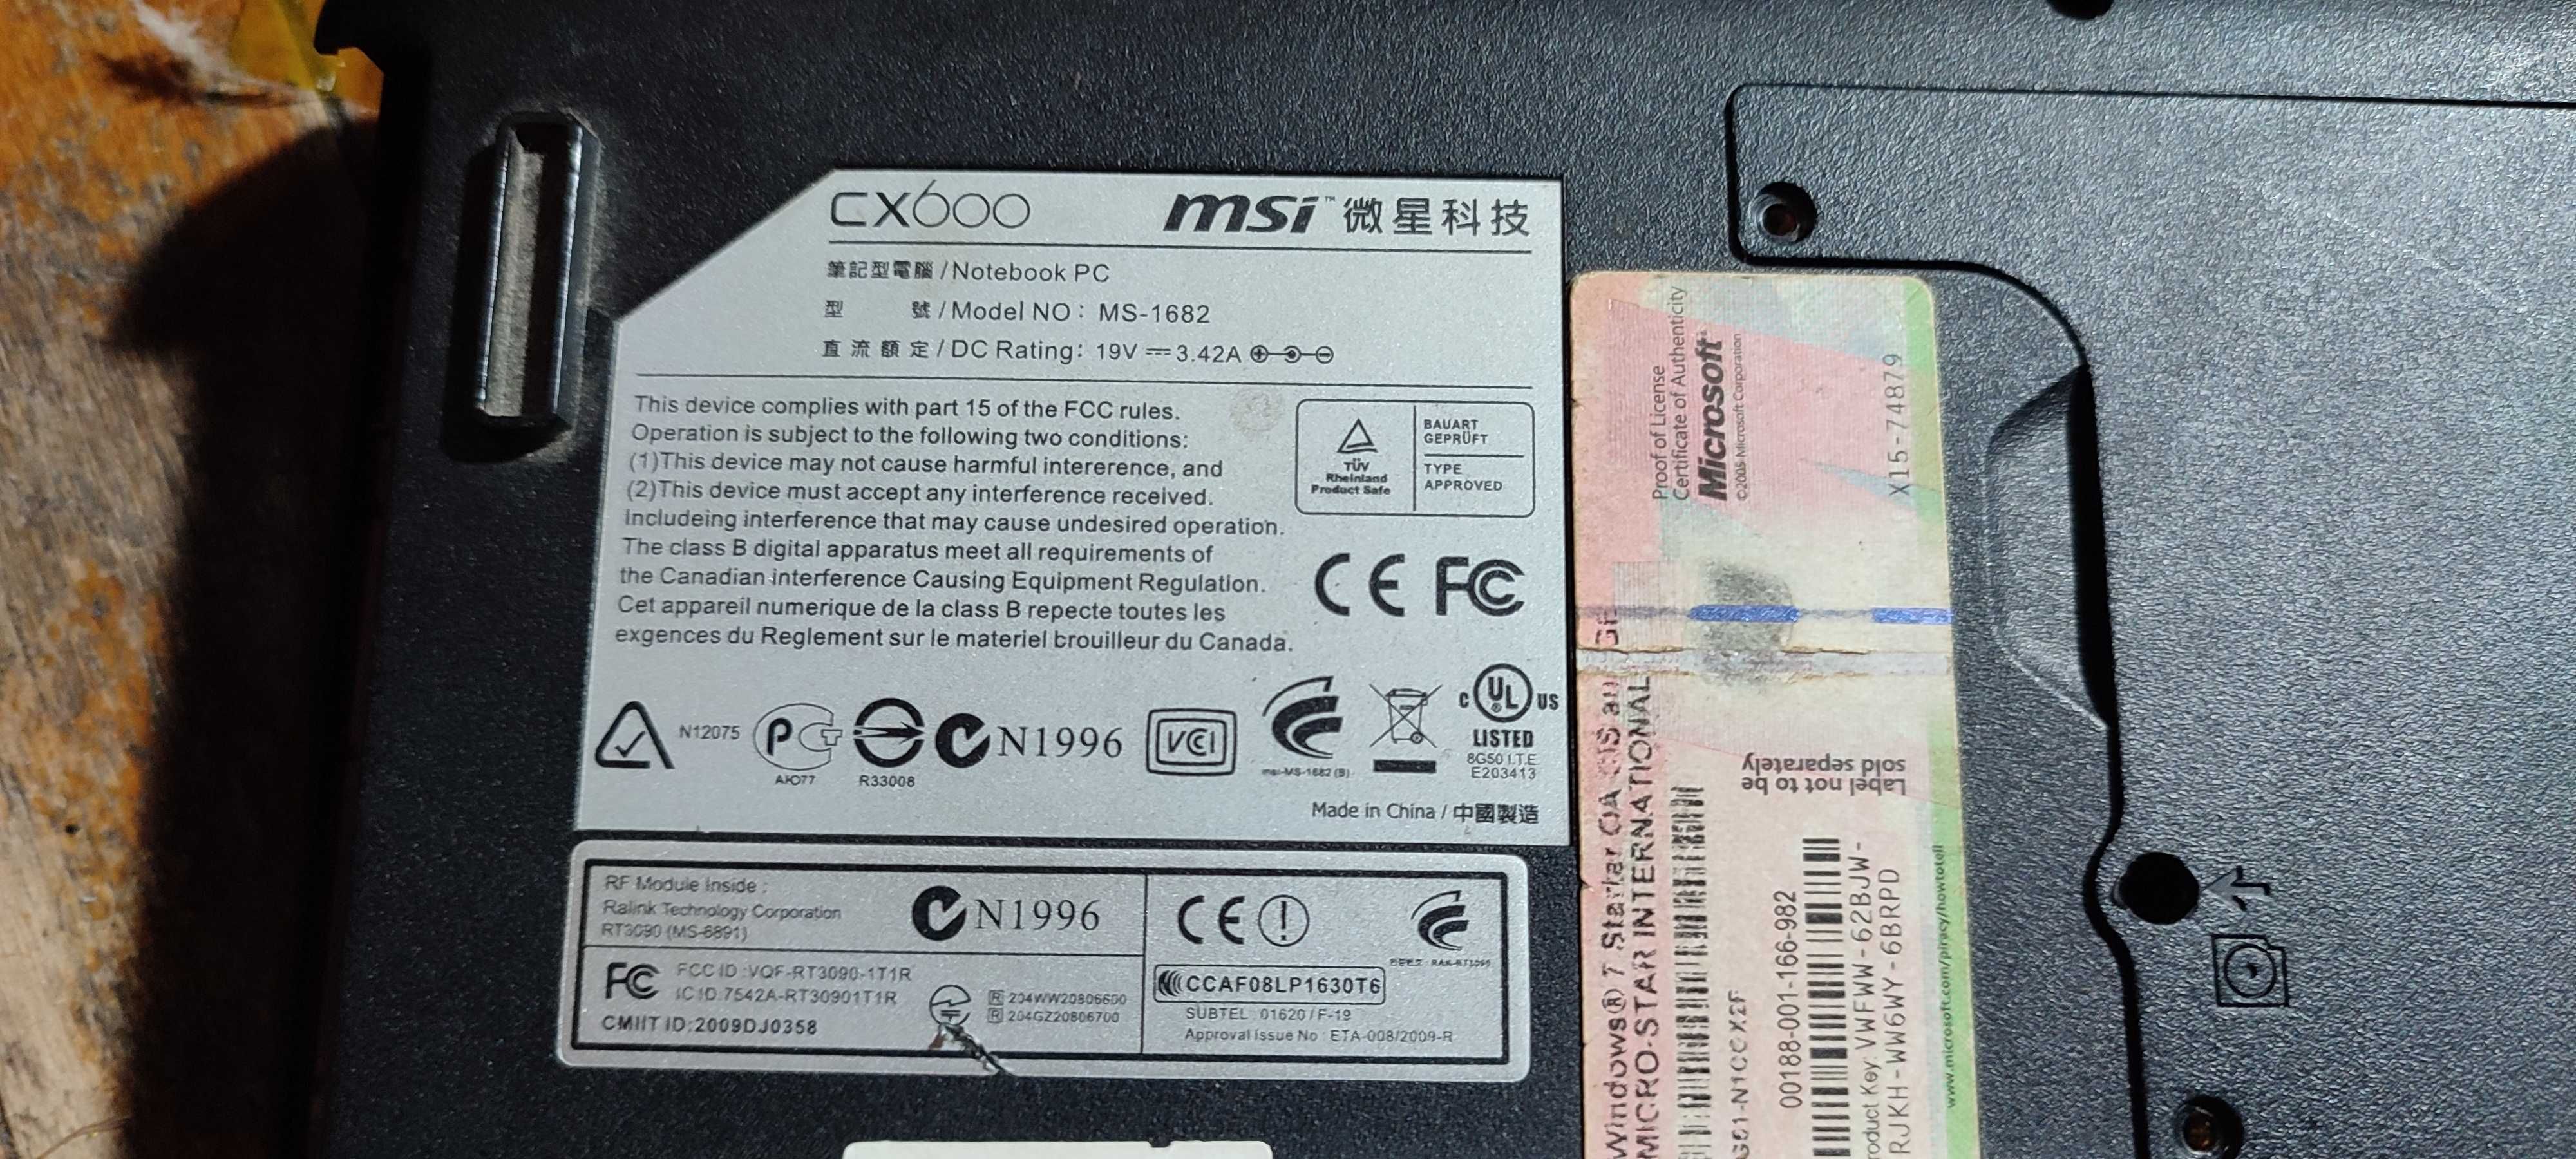 MSI СX600.запчасти.ноутбук.разбор.